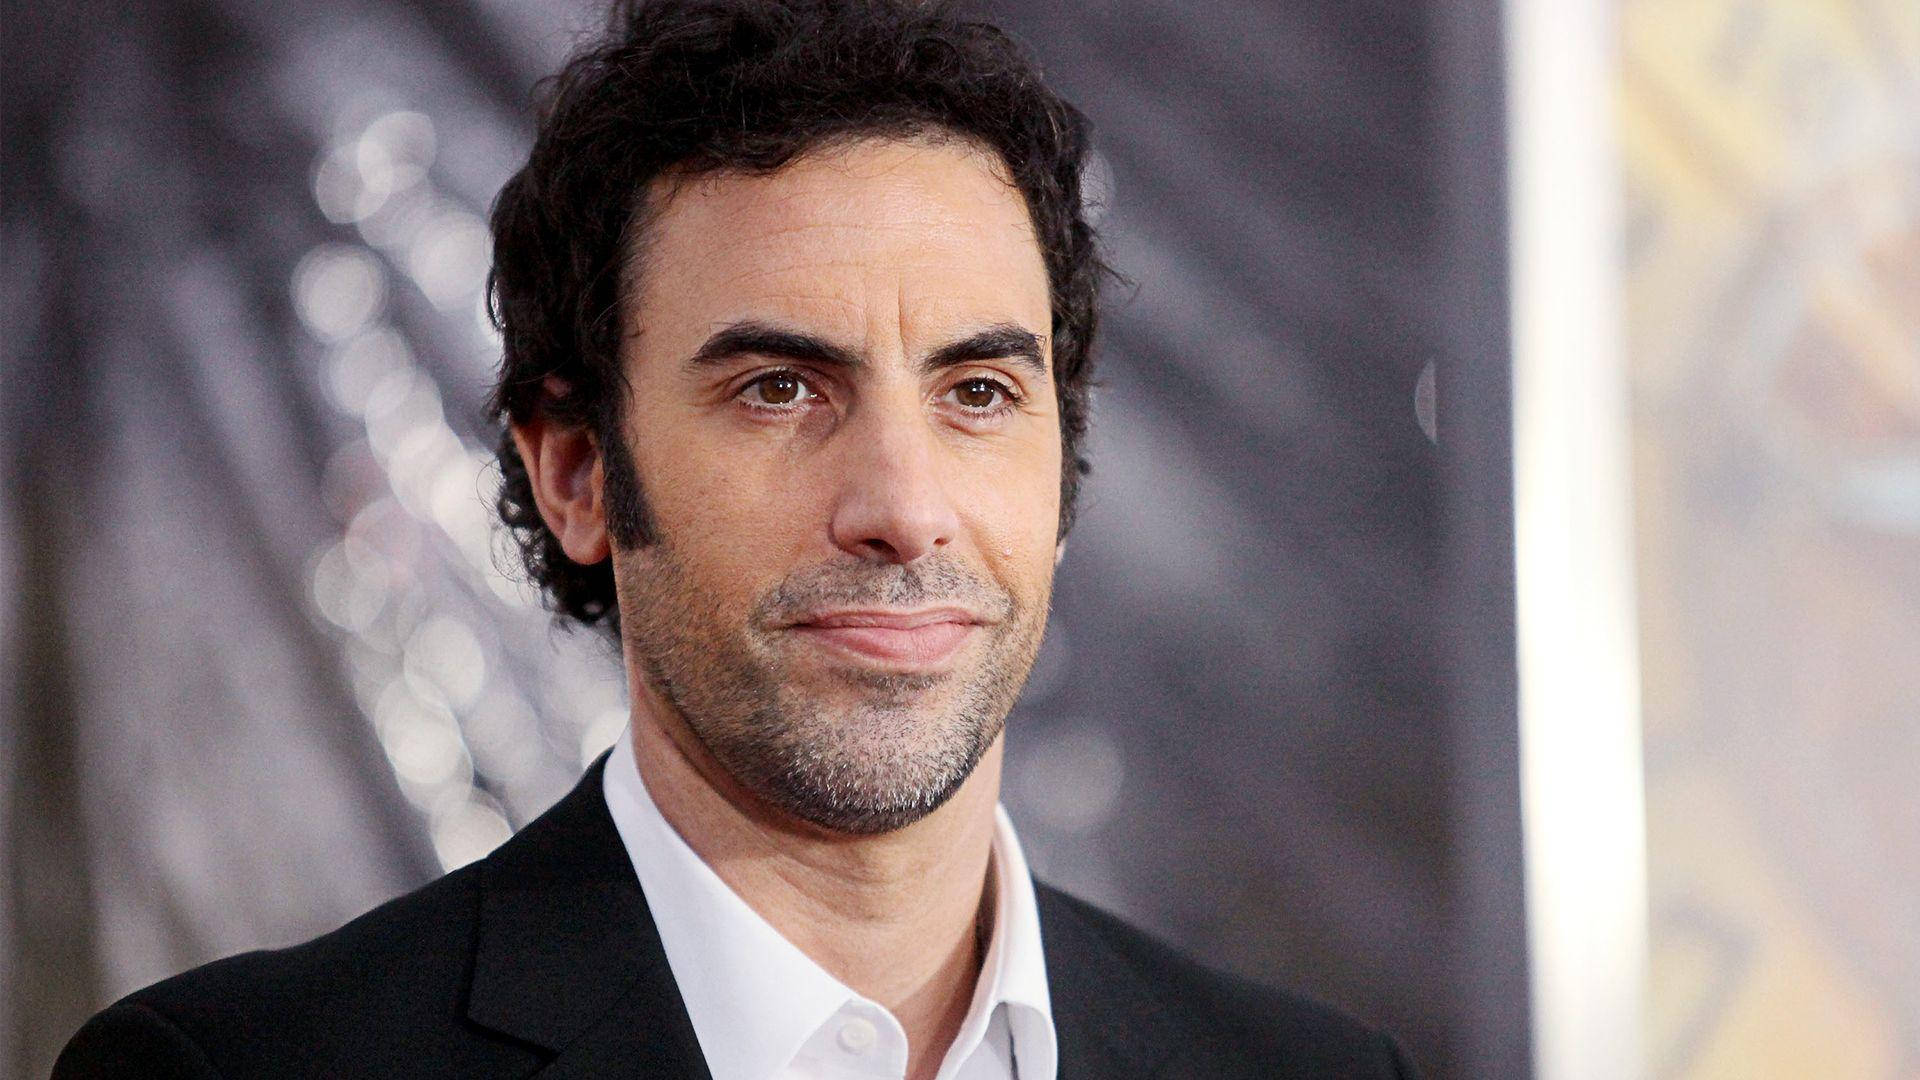 Sachabaron Cohen Borat 2 Premiere - Sacha Baron Cohen Borat 2 Premiere Wallpaper